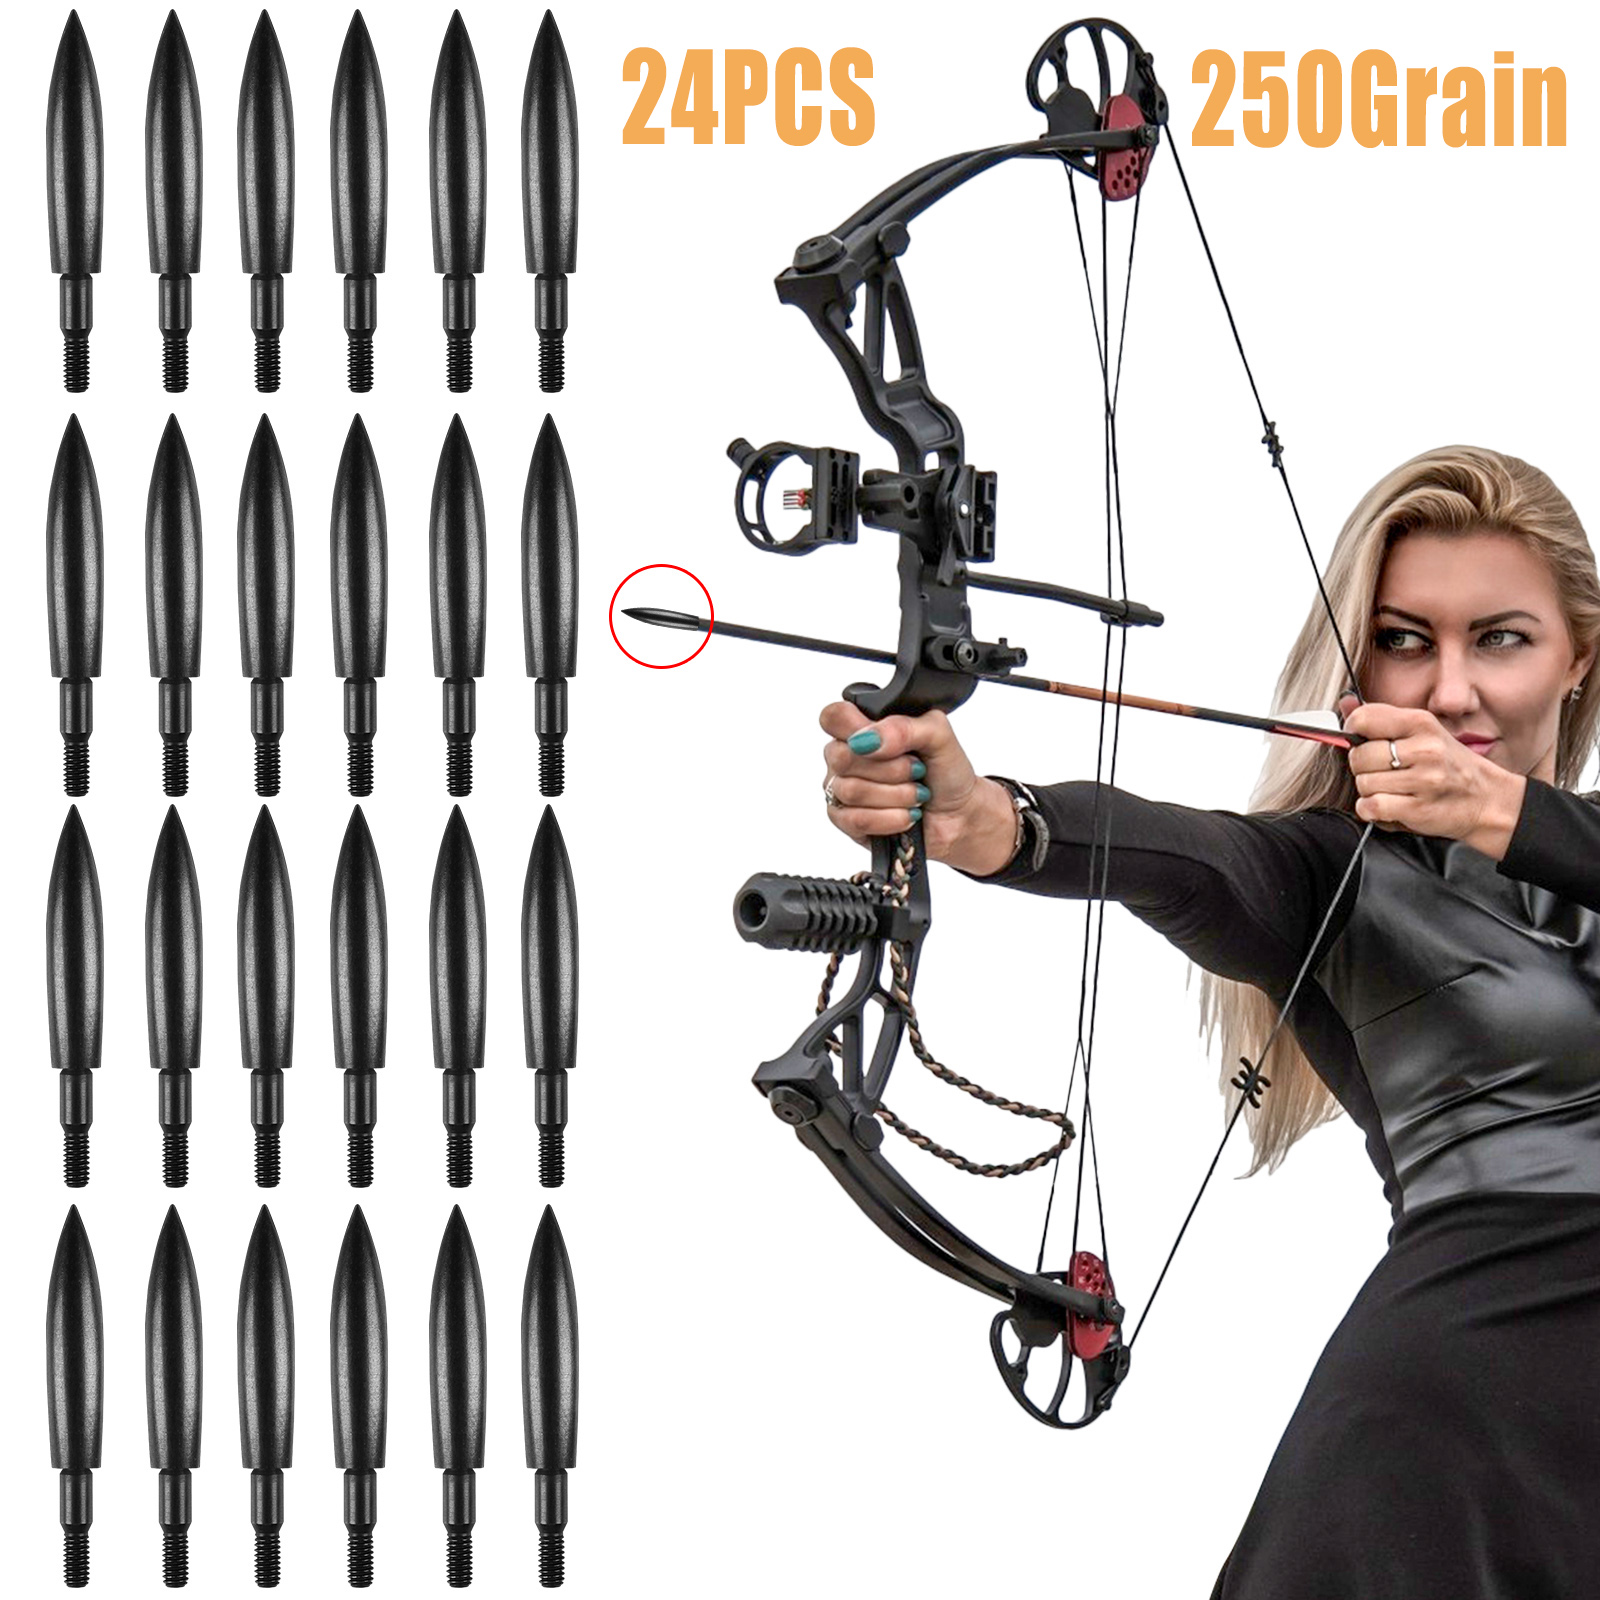 24/12x 100-250 Grain Field Point Screw Archery Arrowheads Broadhead Arrow Tips